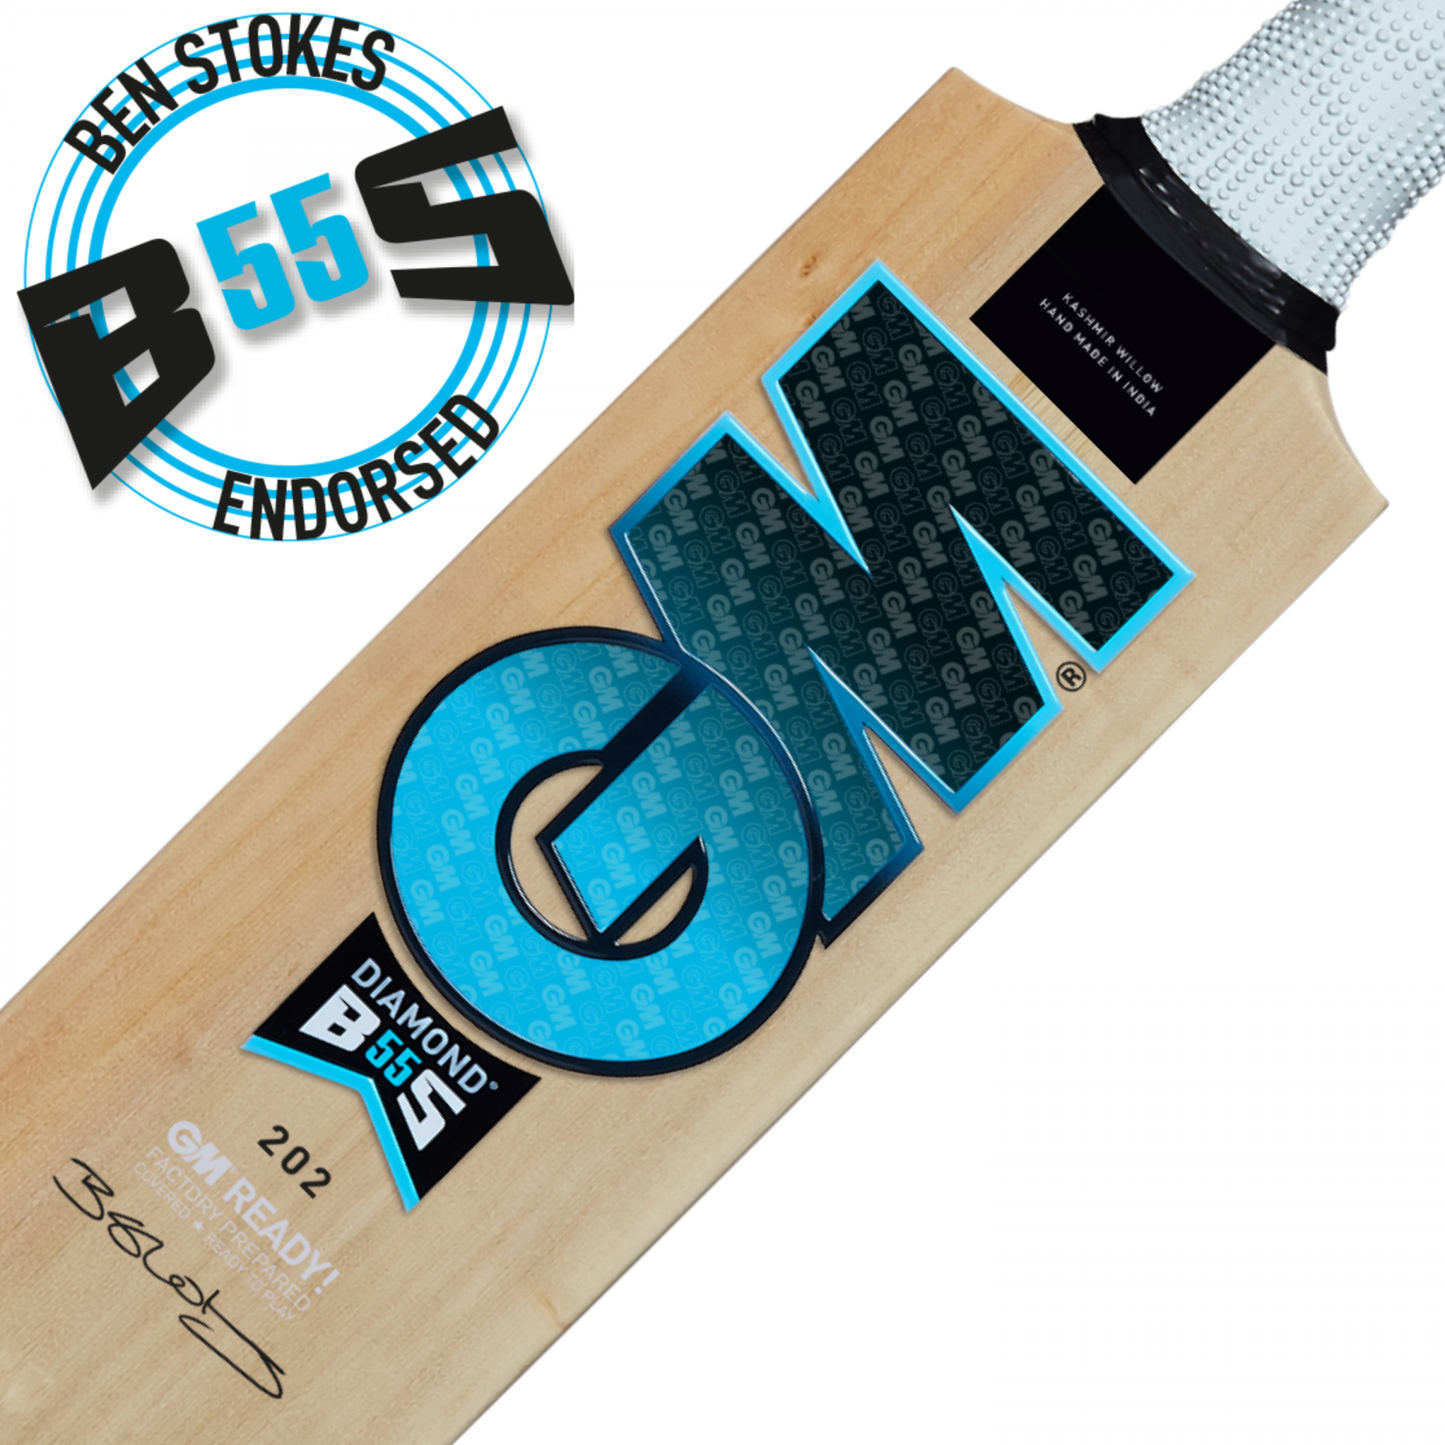 G&amp;M Diamond 202 Cricket Bat